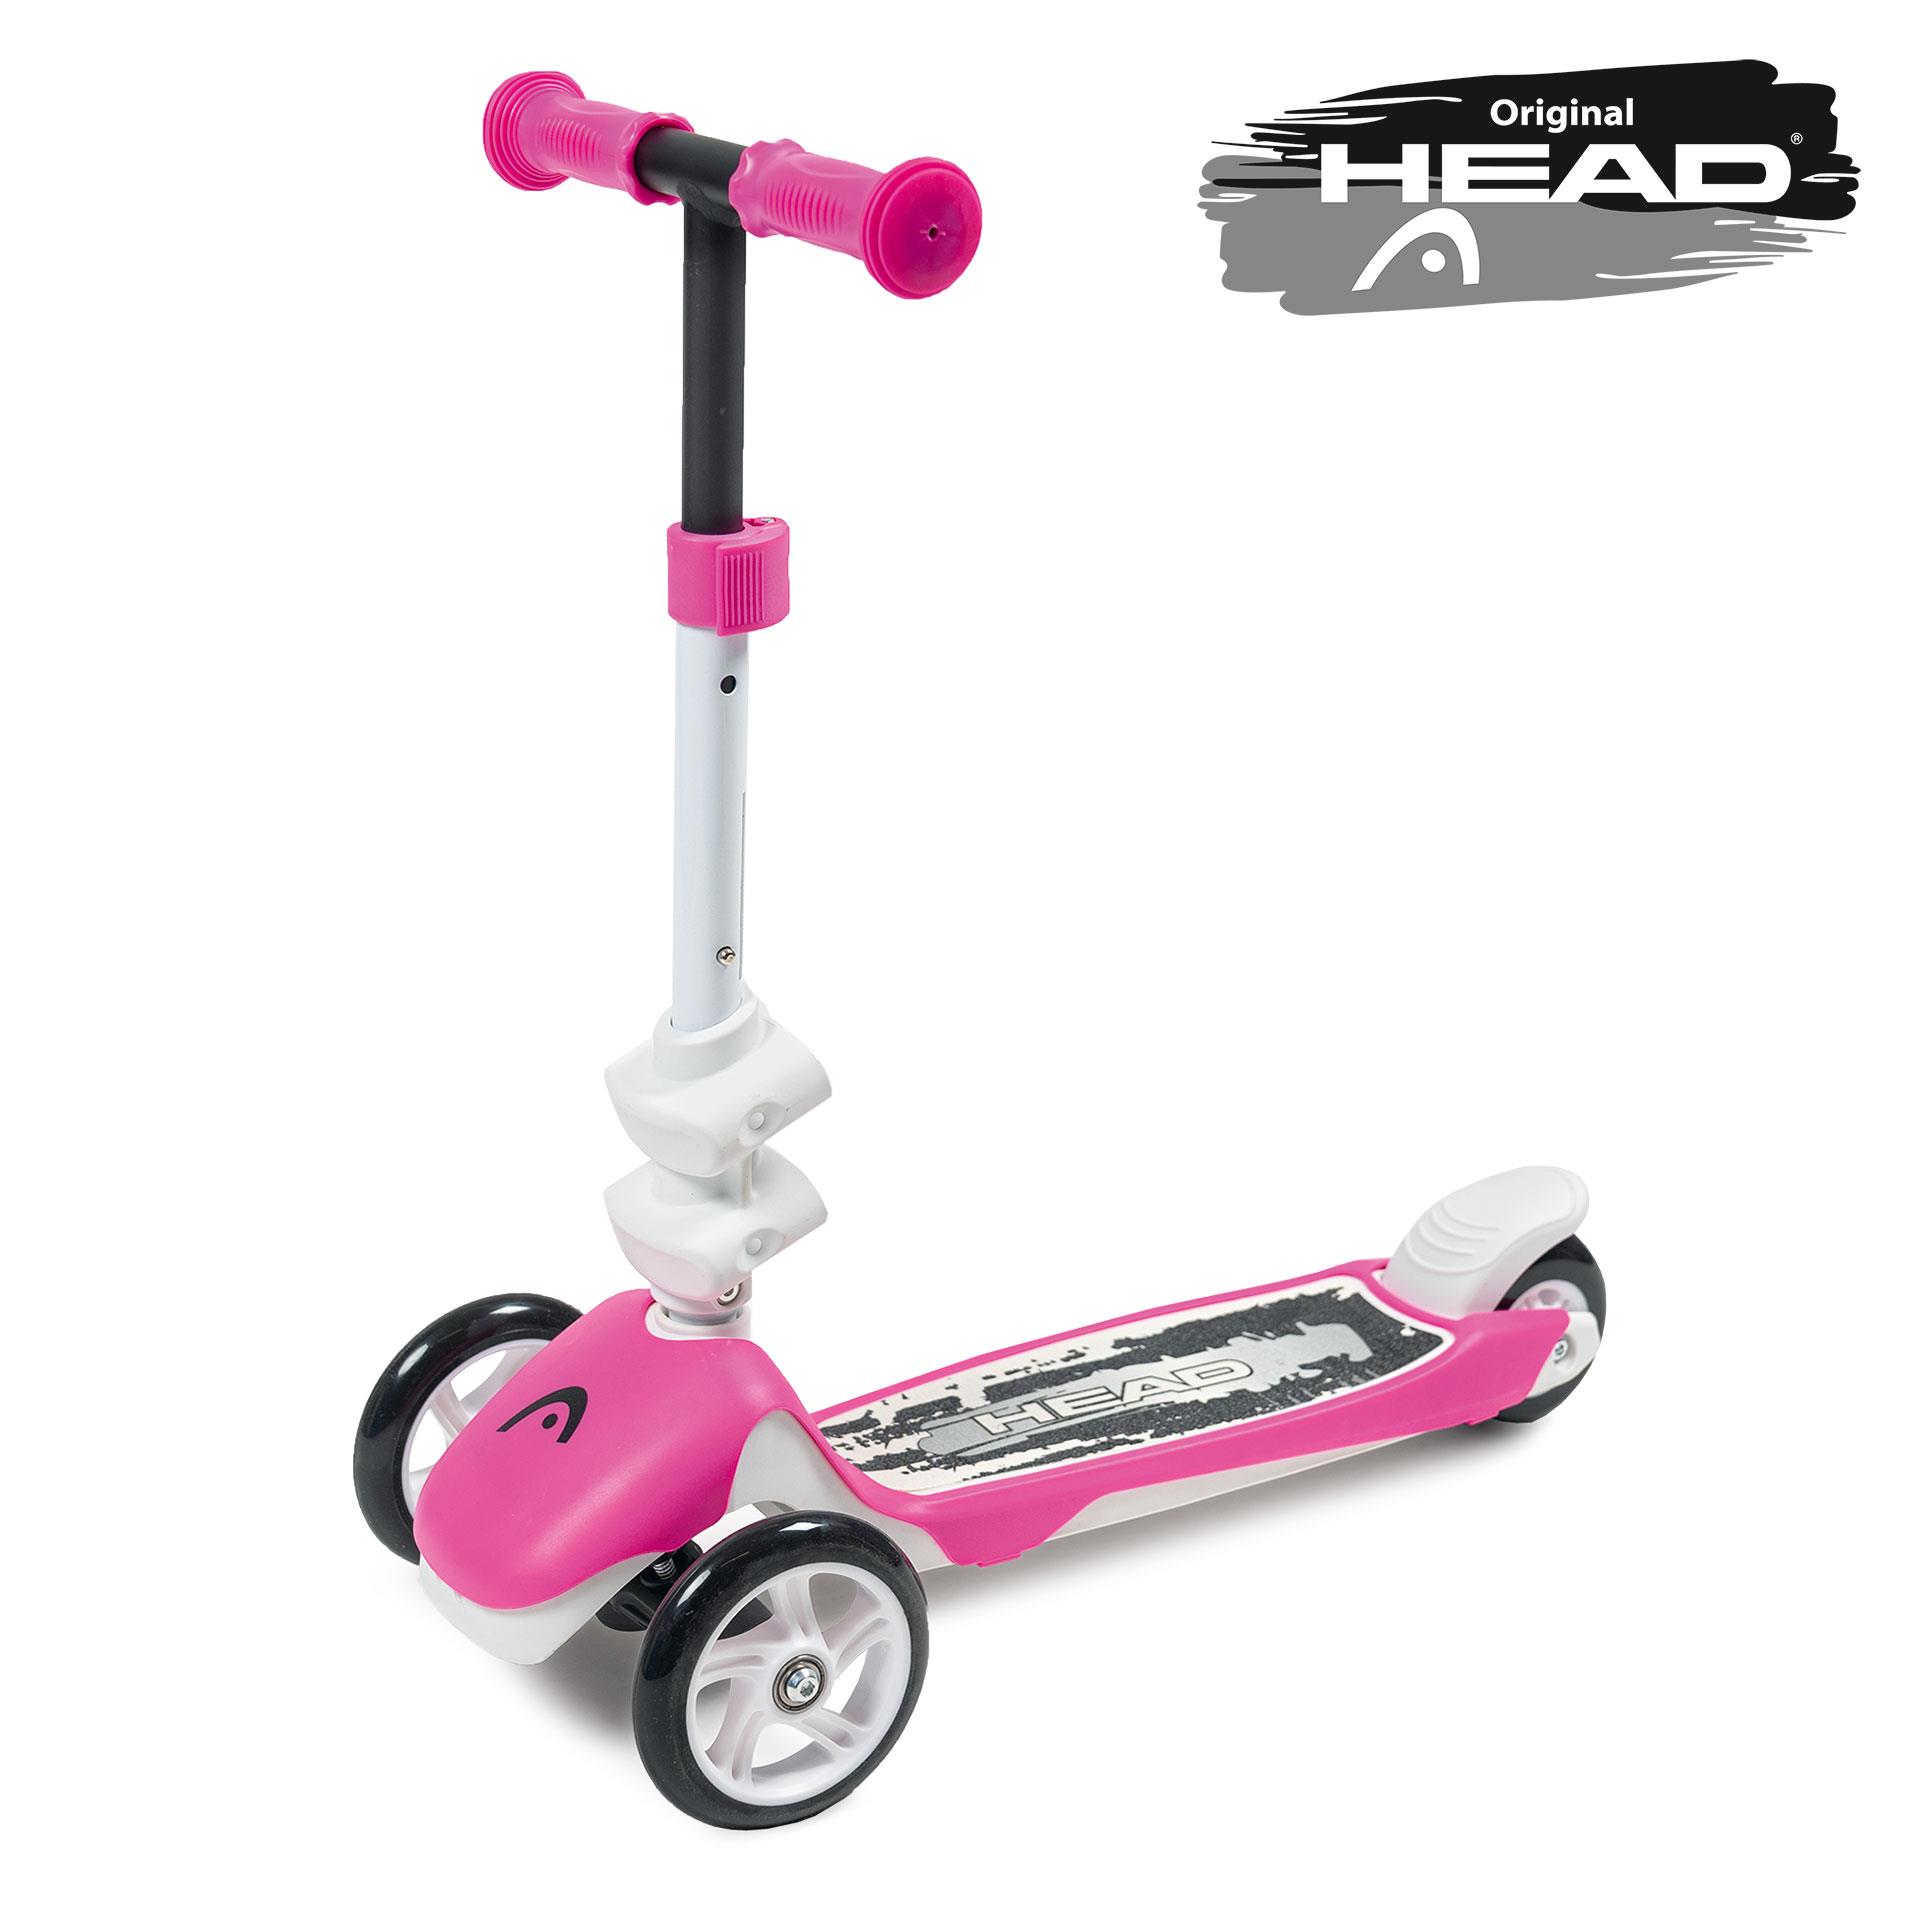 Kickboard Mini HEAD originale pink, 3 in 1